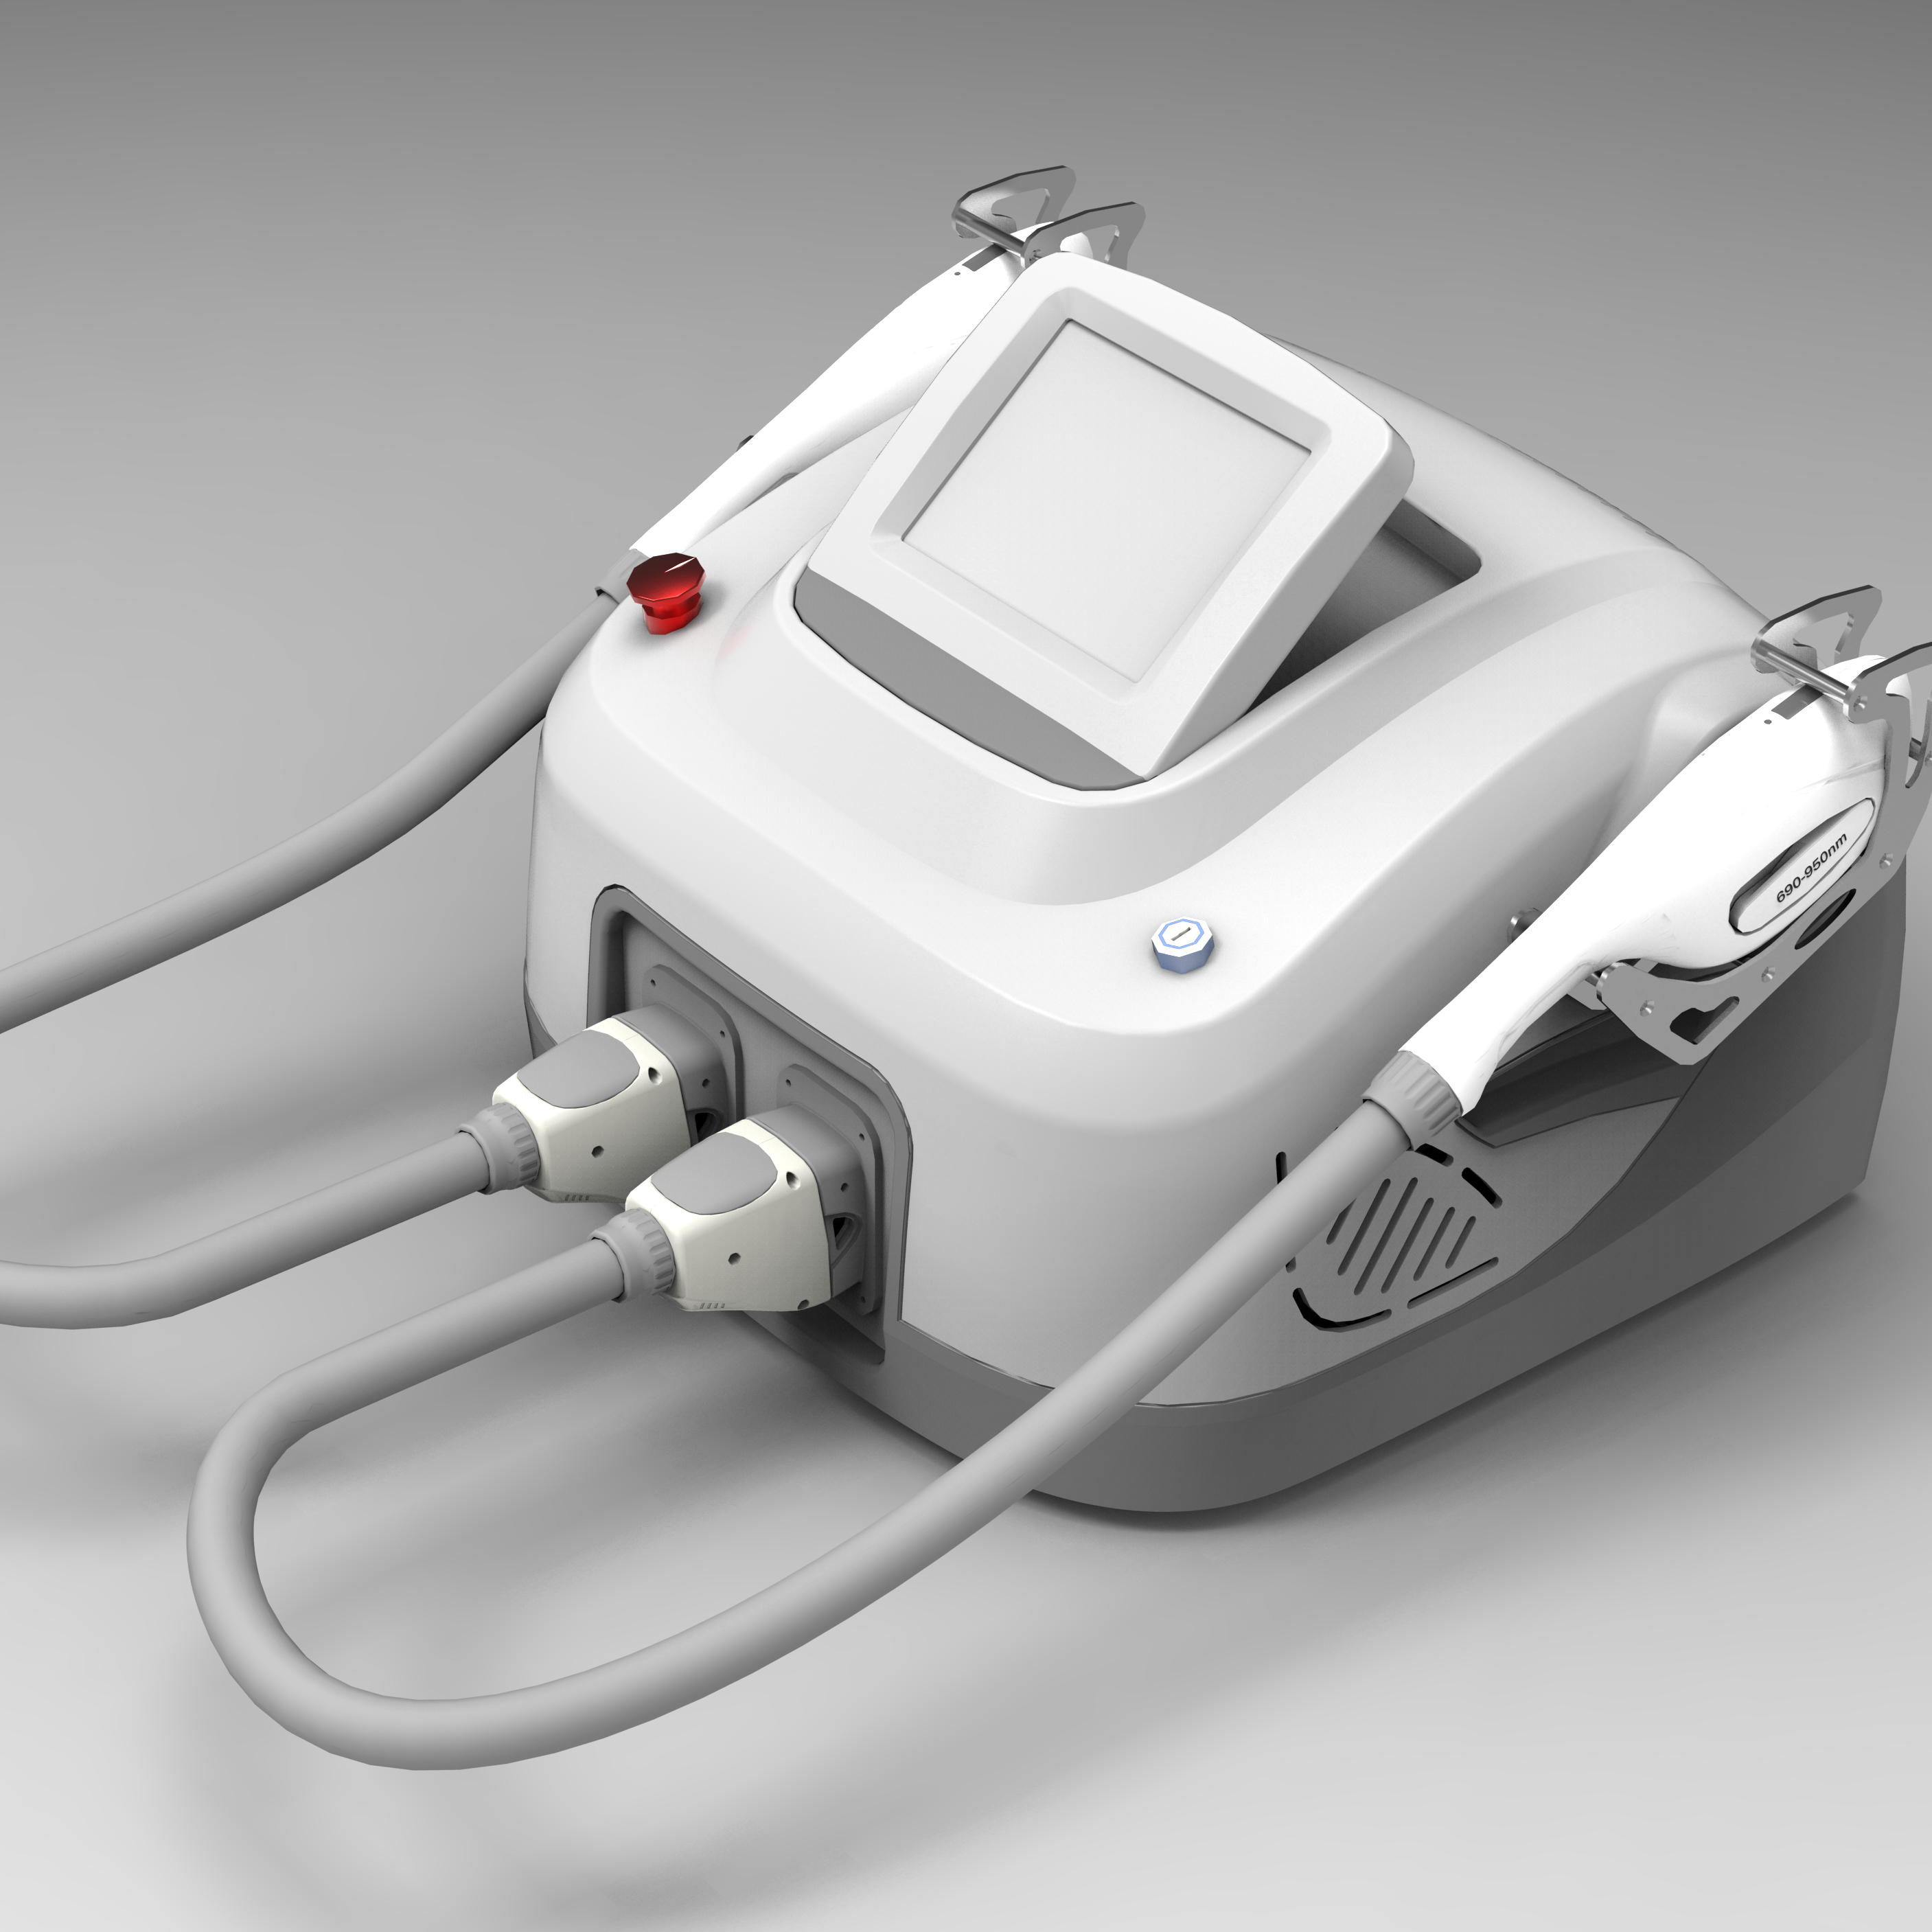 Best quality SHR+E-light laser ipl permanent hair removal machine for sale